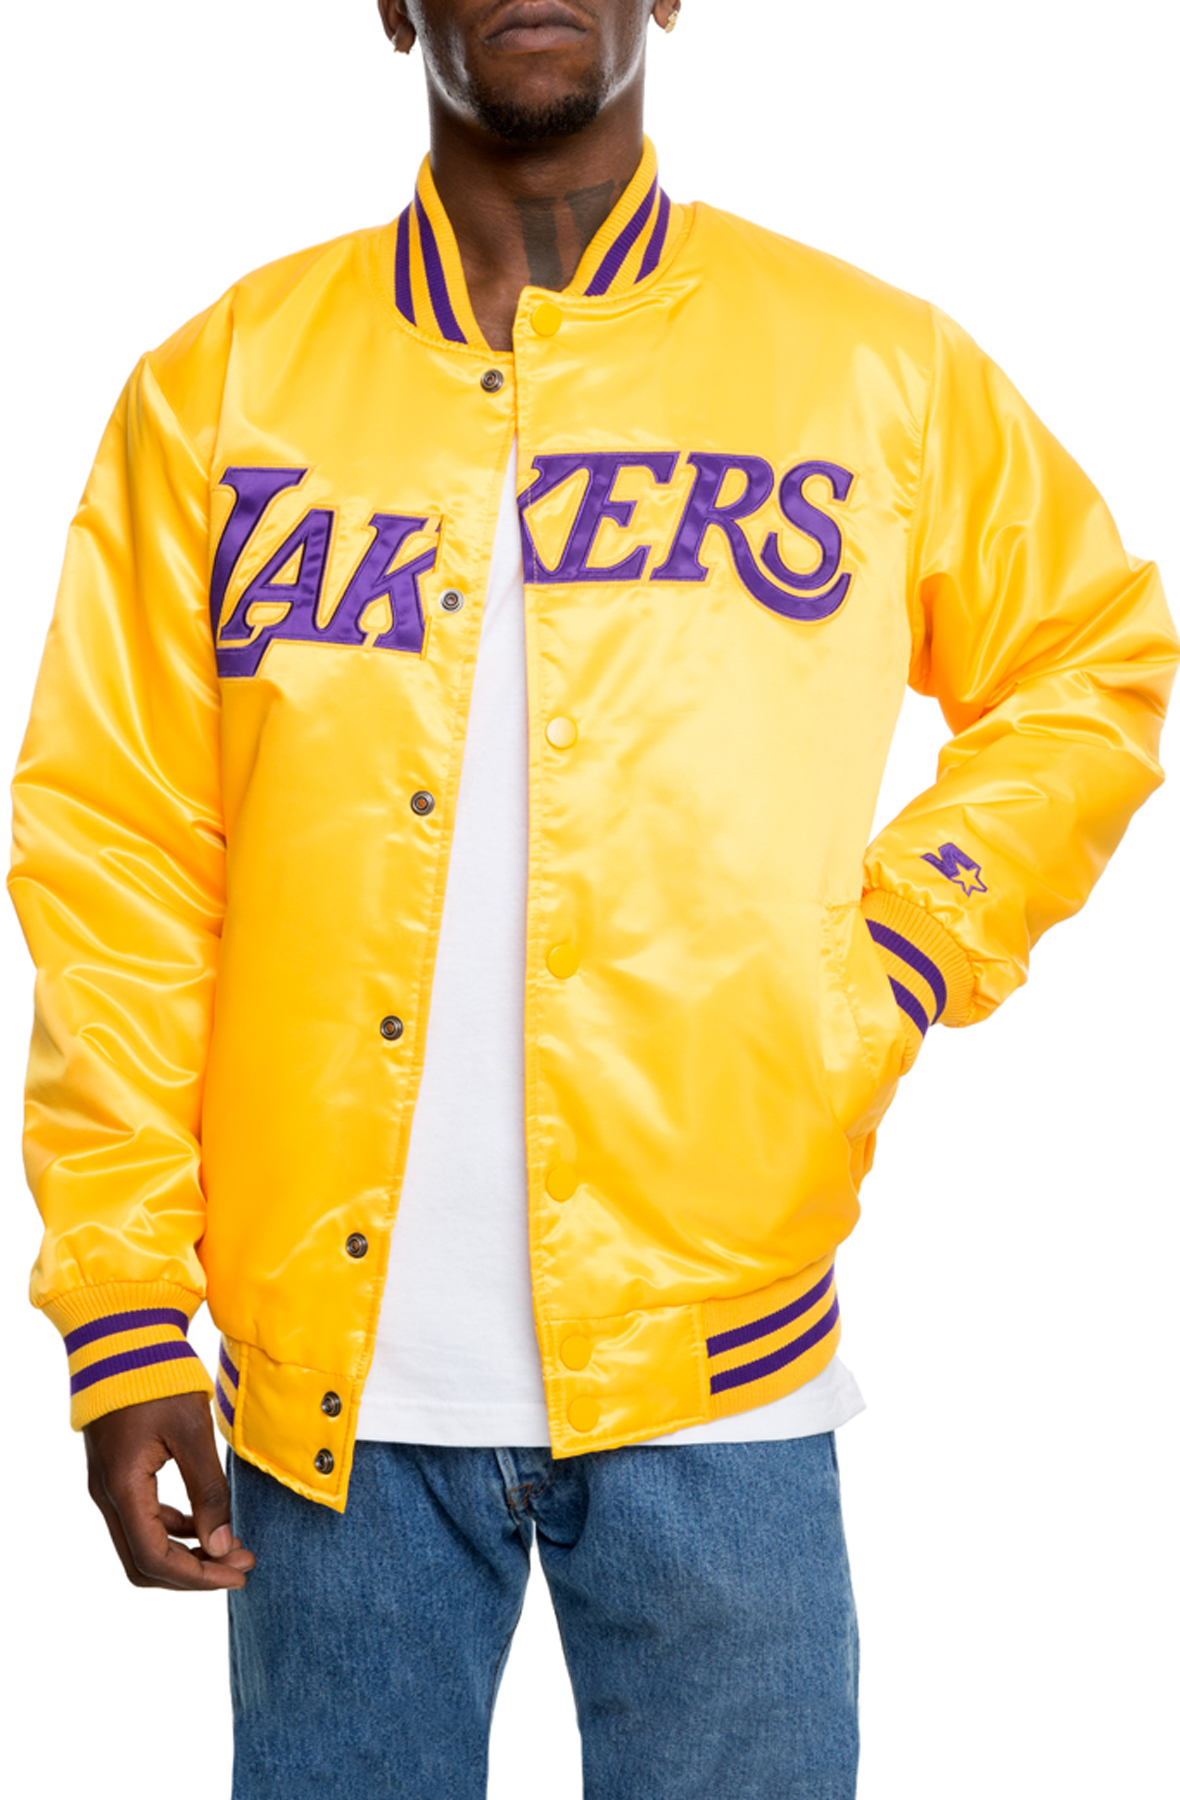 STARTER Los Angeles Lakers Jacket LS83Y666LLK - Shiekh